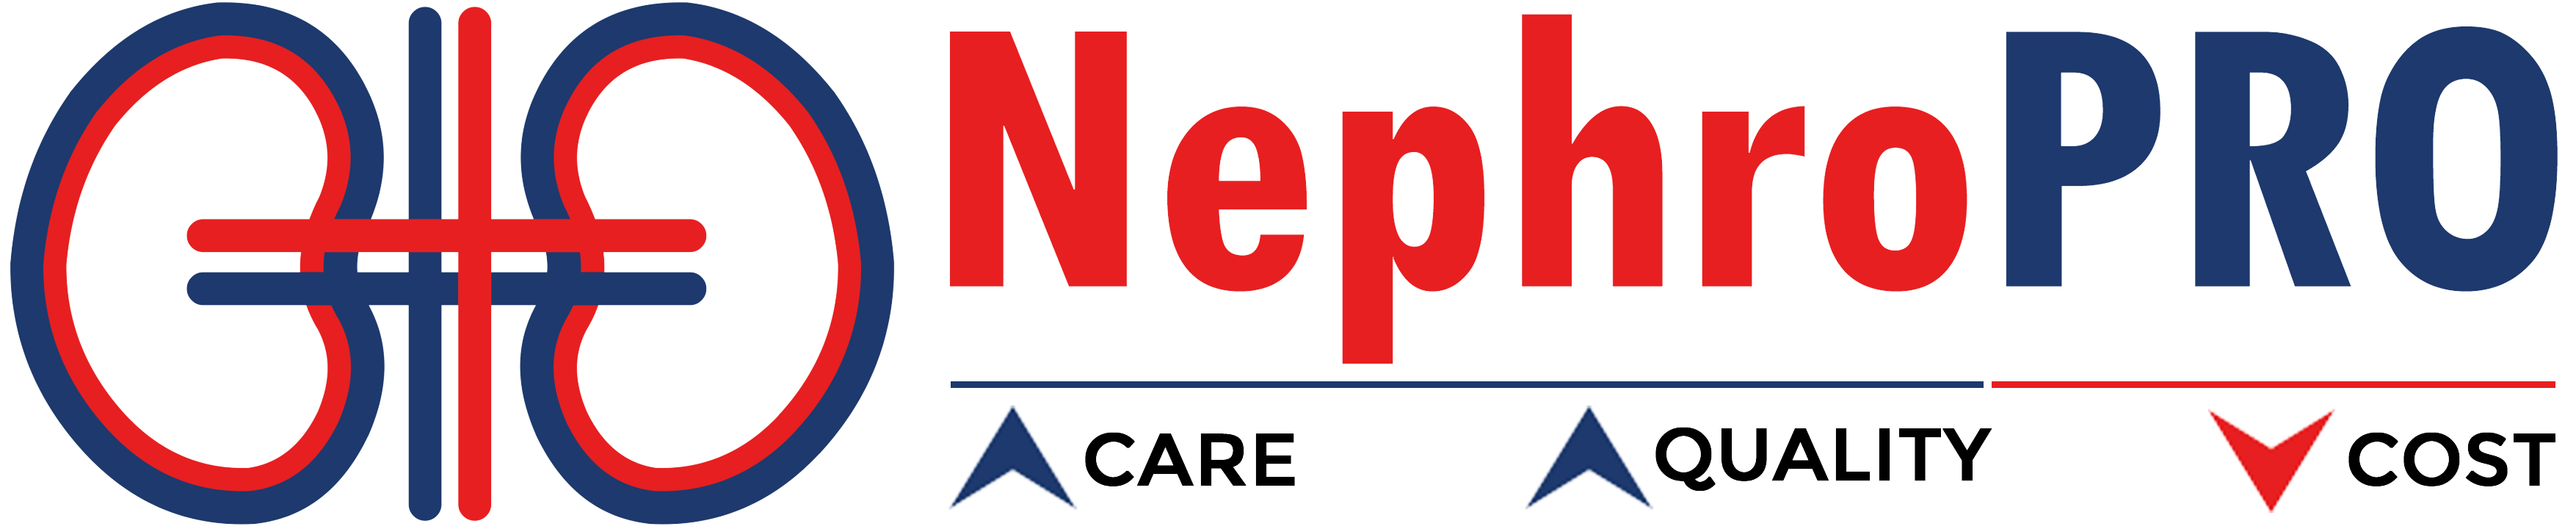 NephroPRO Dialysis Services